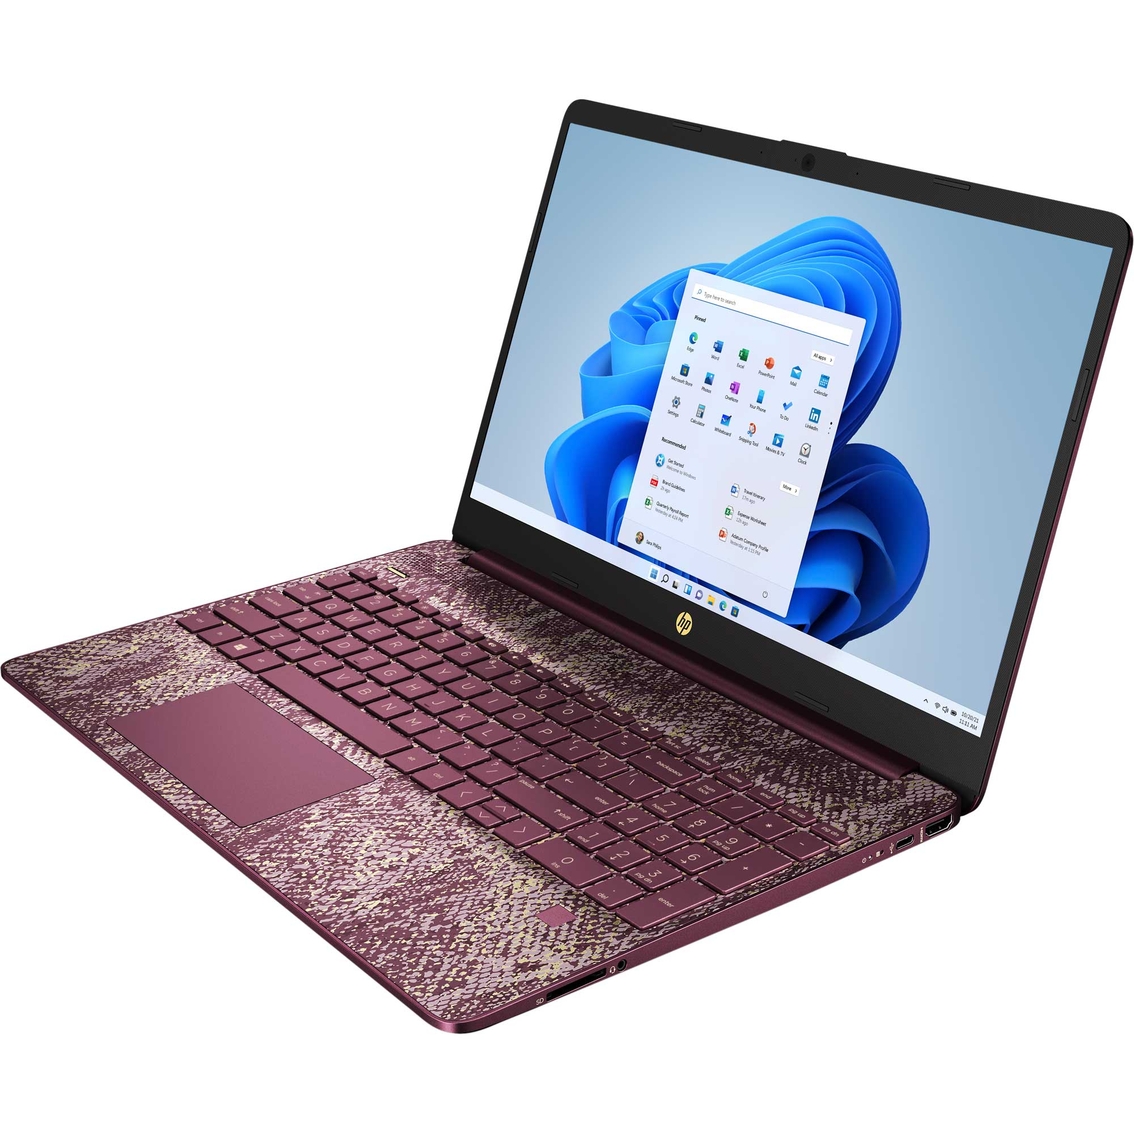 HP Pavilion Laptop, 15.6 HD Display, Intel Pentium Quad-Core